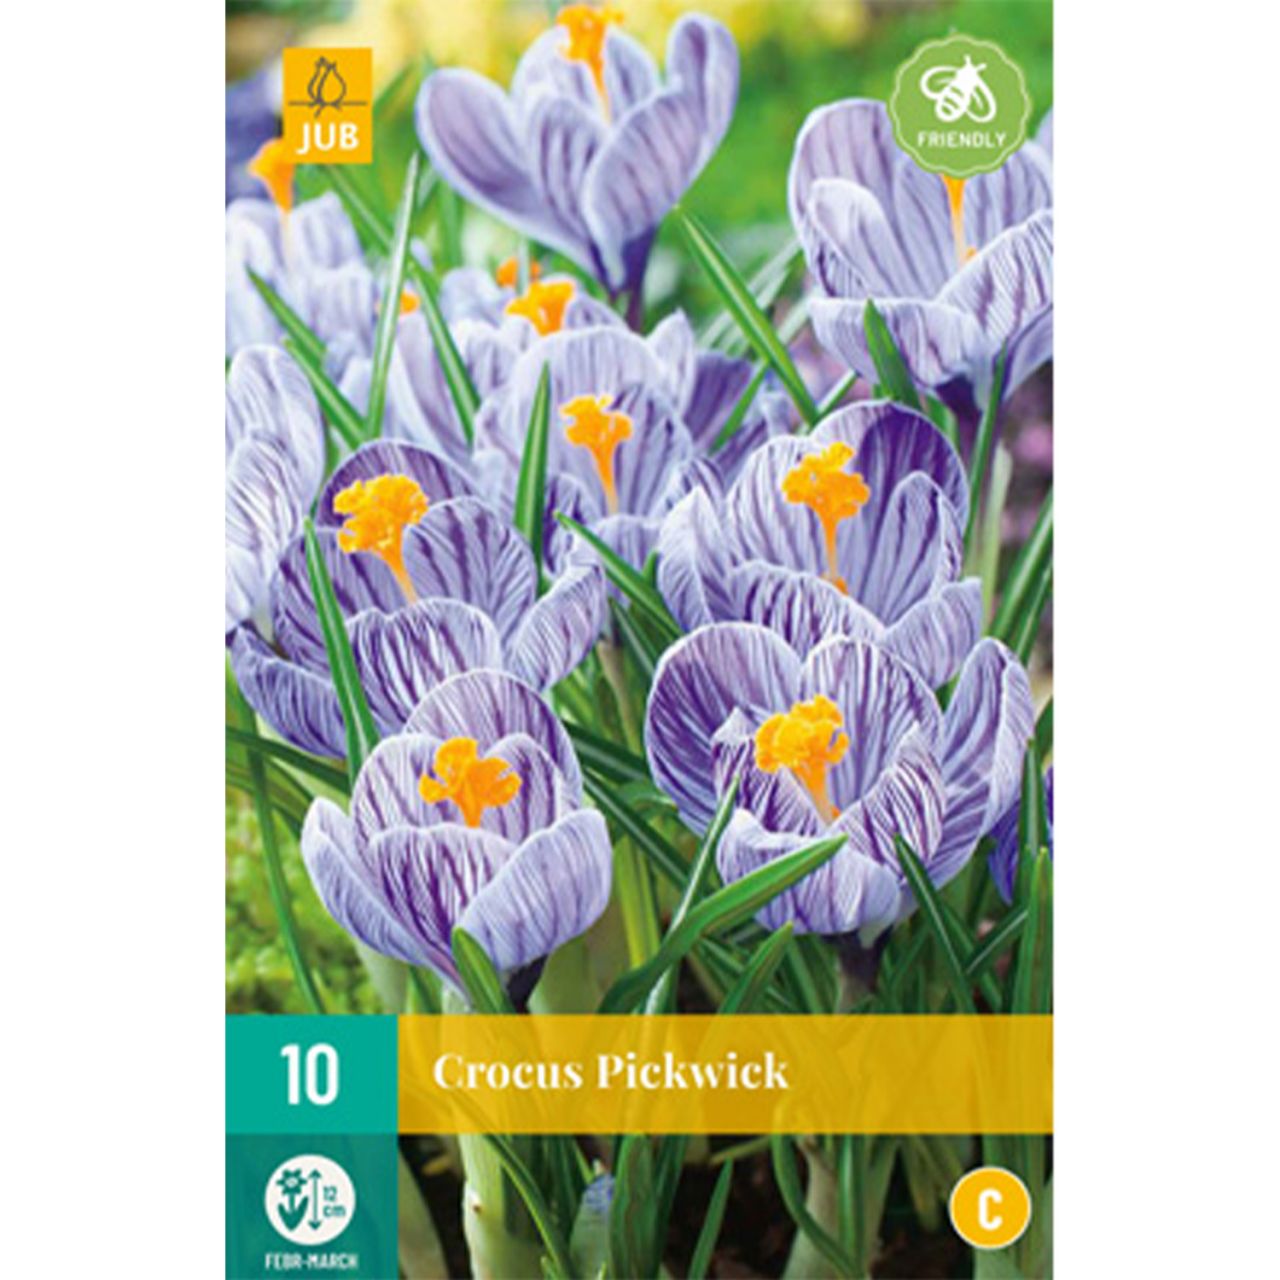 Kategorie <b>Herbst-Blumenzwiebeln </b> - Großblumige Krokusse 'Pickwick' - 10 Stück - Crocus 'Pickwick'